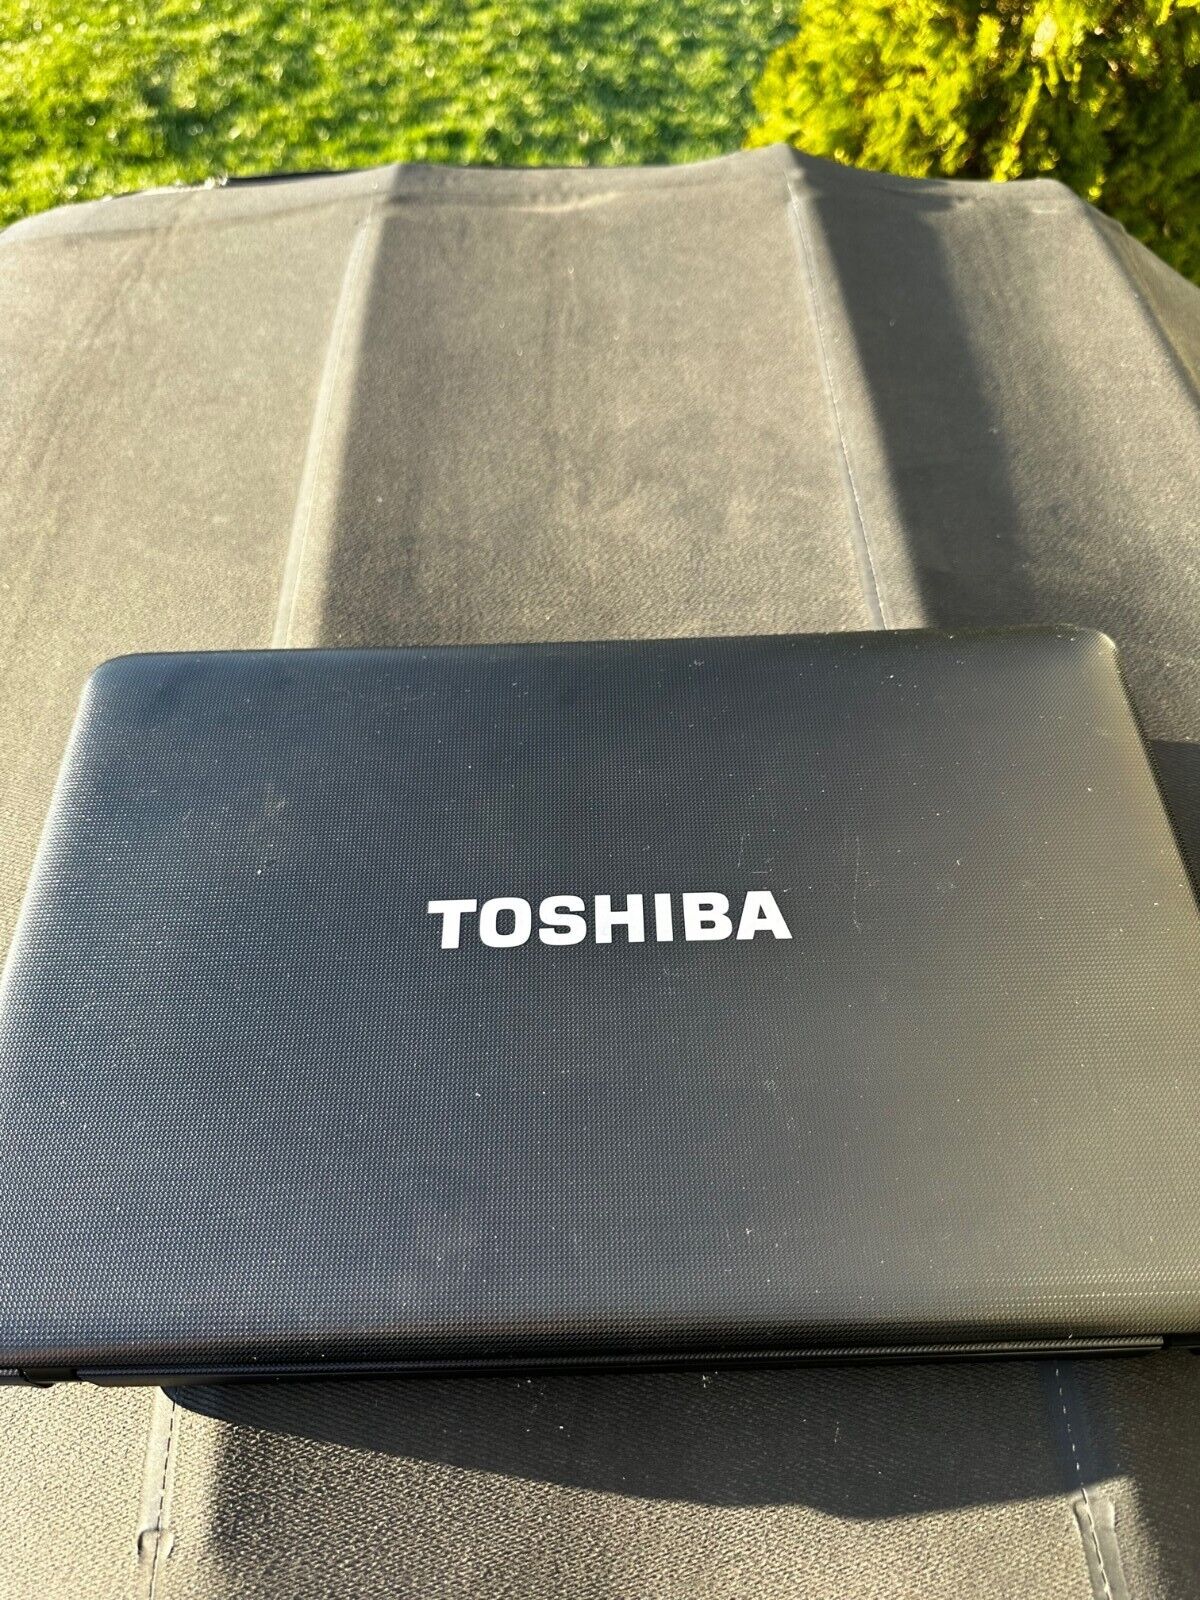 Toshiba Satellite Pro Intel Core I5 8GB RAM Windows 7 Pro